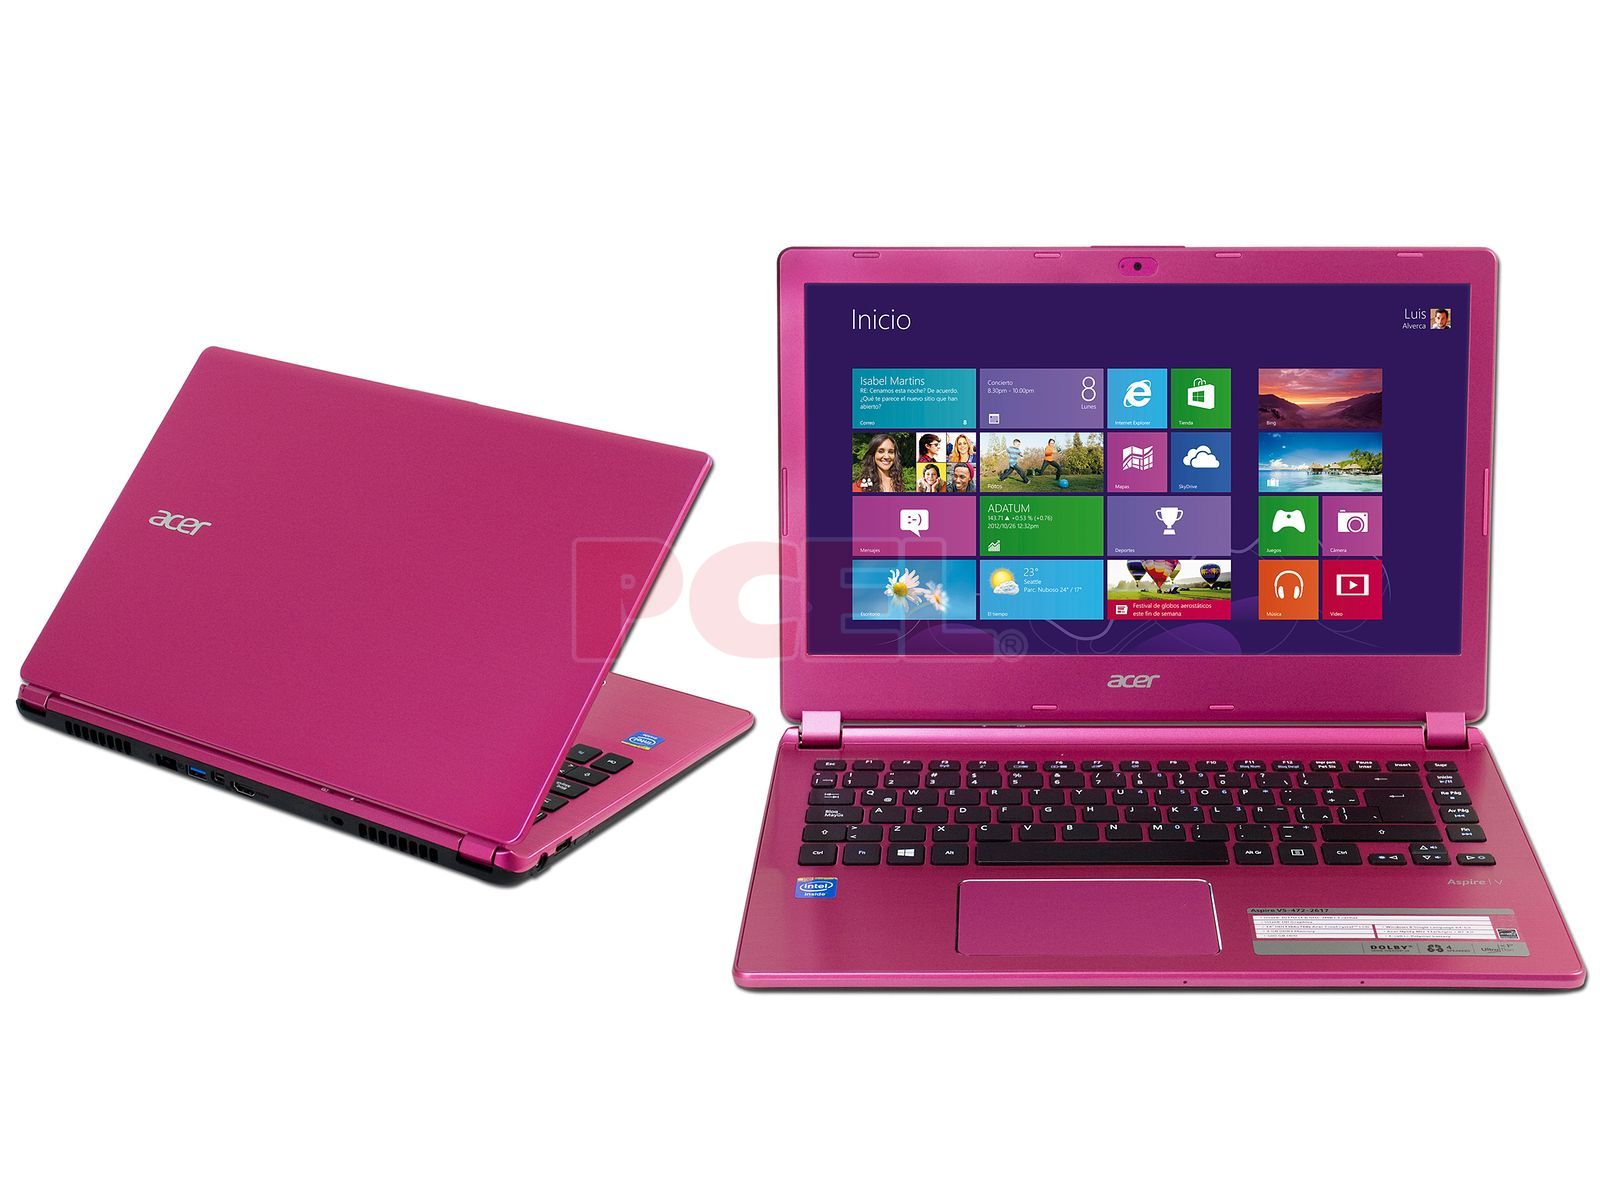 Laptop Acer Aspire V5-472-2617: Procesador Intel Celeron 1017U (1.6 GHz), Memoria 4 GB DDR3, Disco Duro de 500 GB, Pantalla LED de 14", Video Intel Red 802.11b/g/n, Windows 8 (64 Bits)